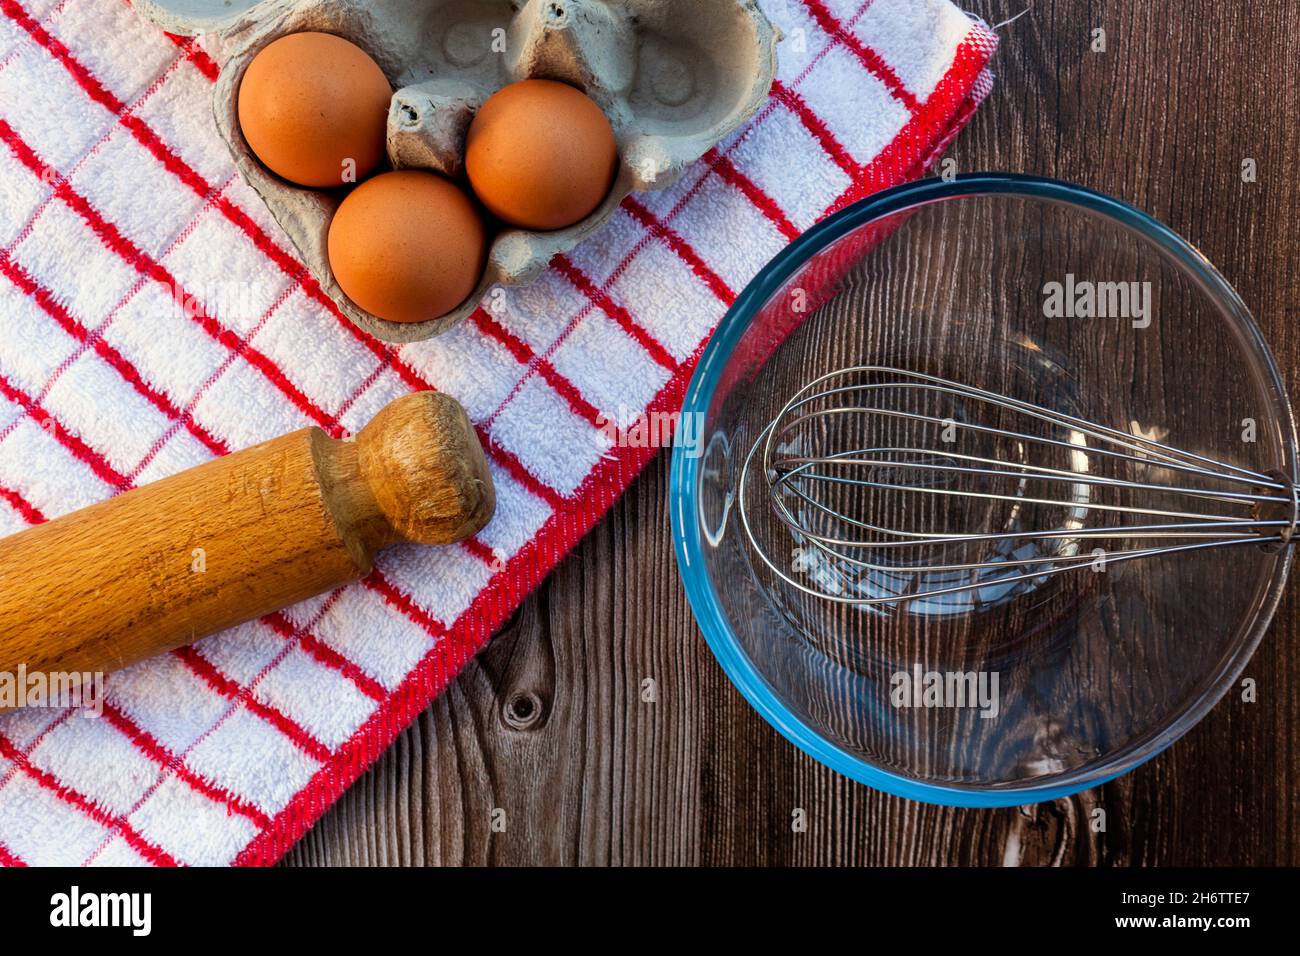 Home baking with free range eggs Stock Photo